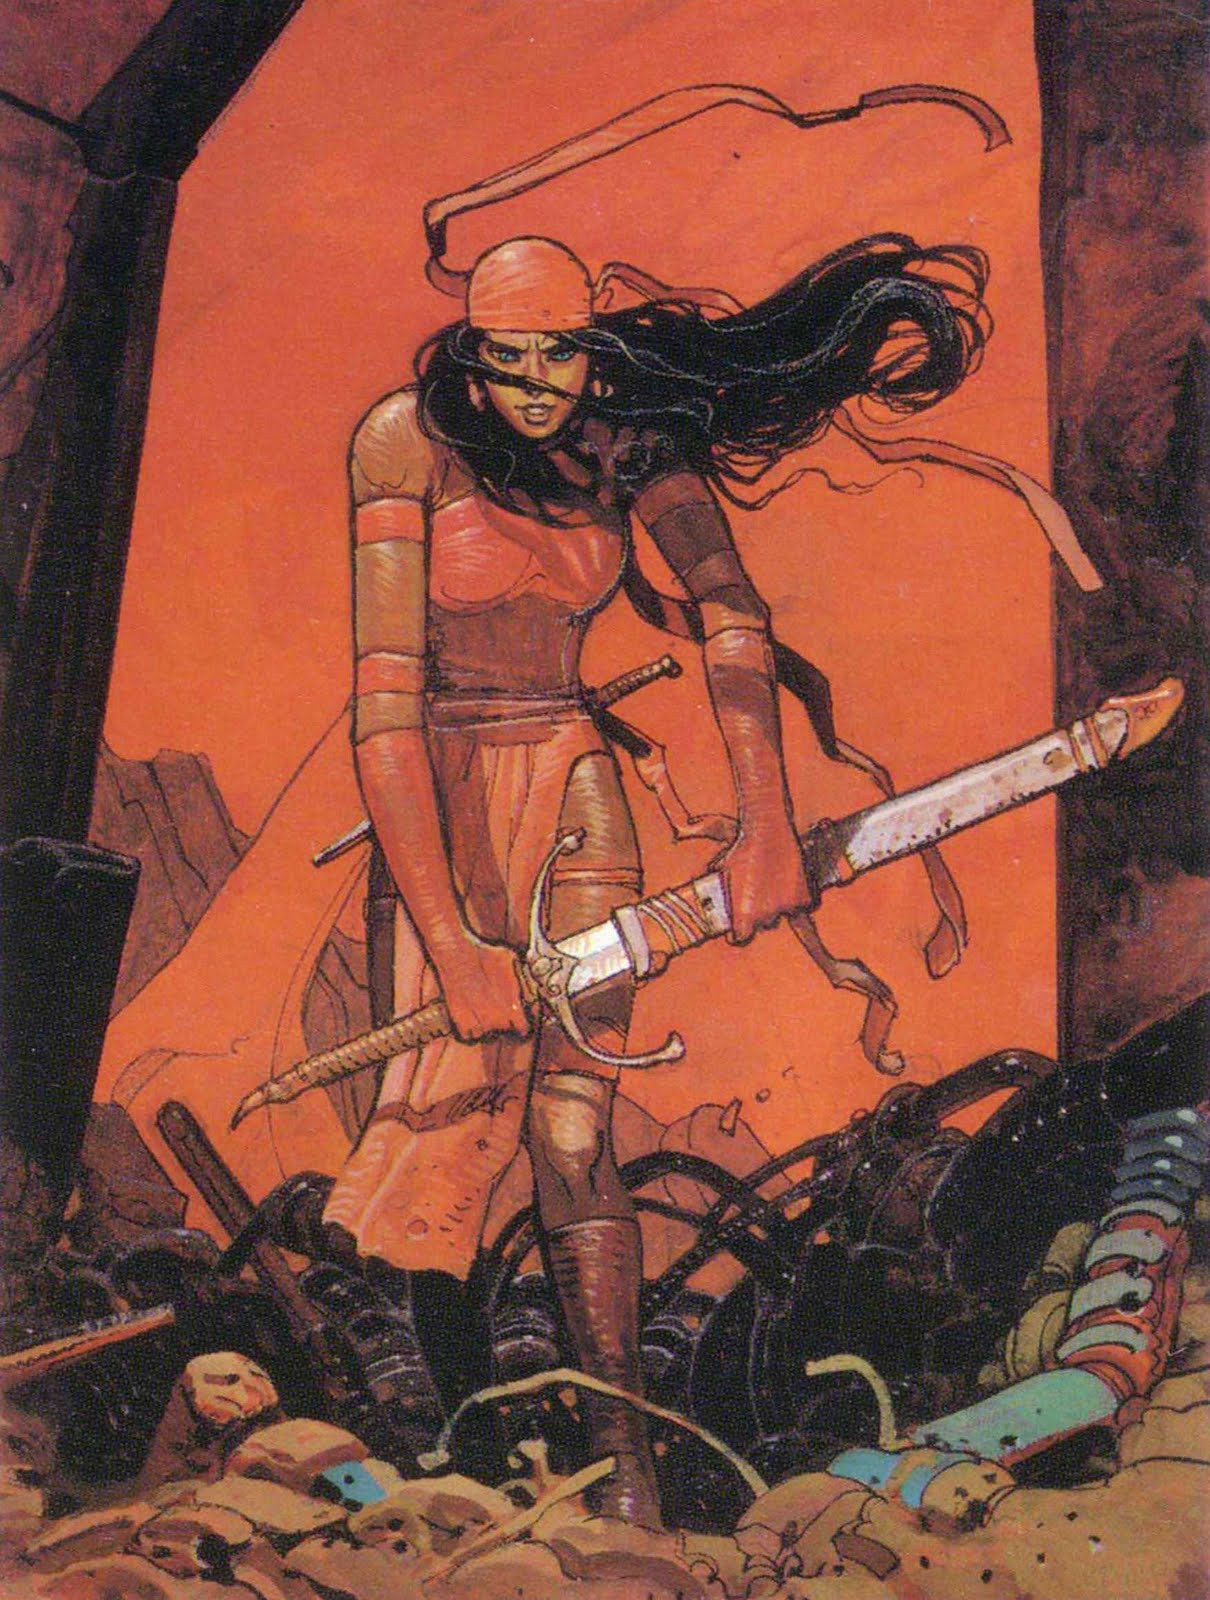 Elektra by Moebius